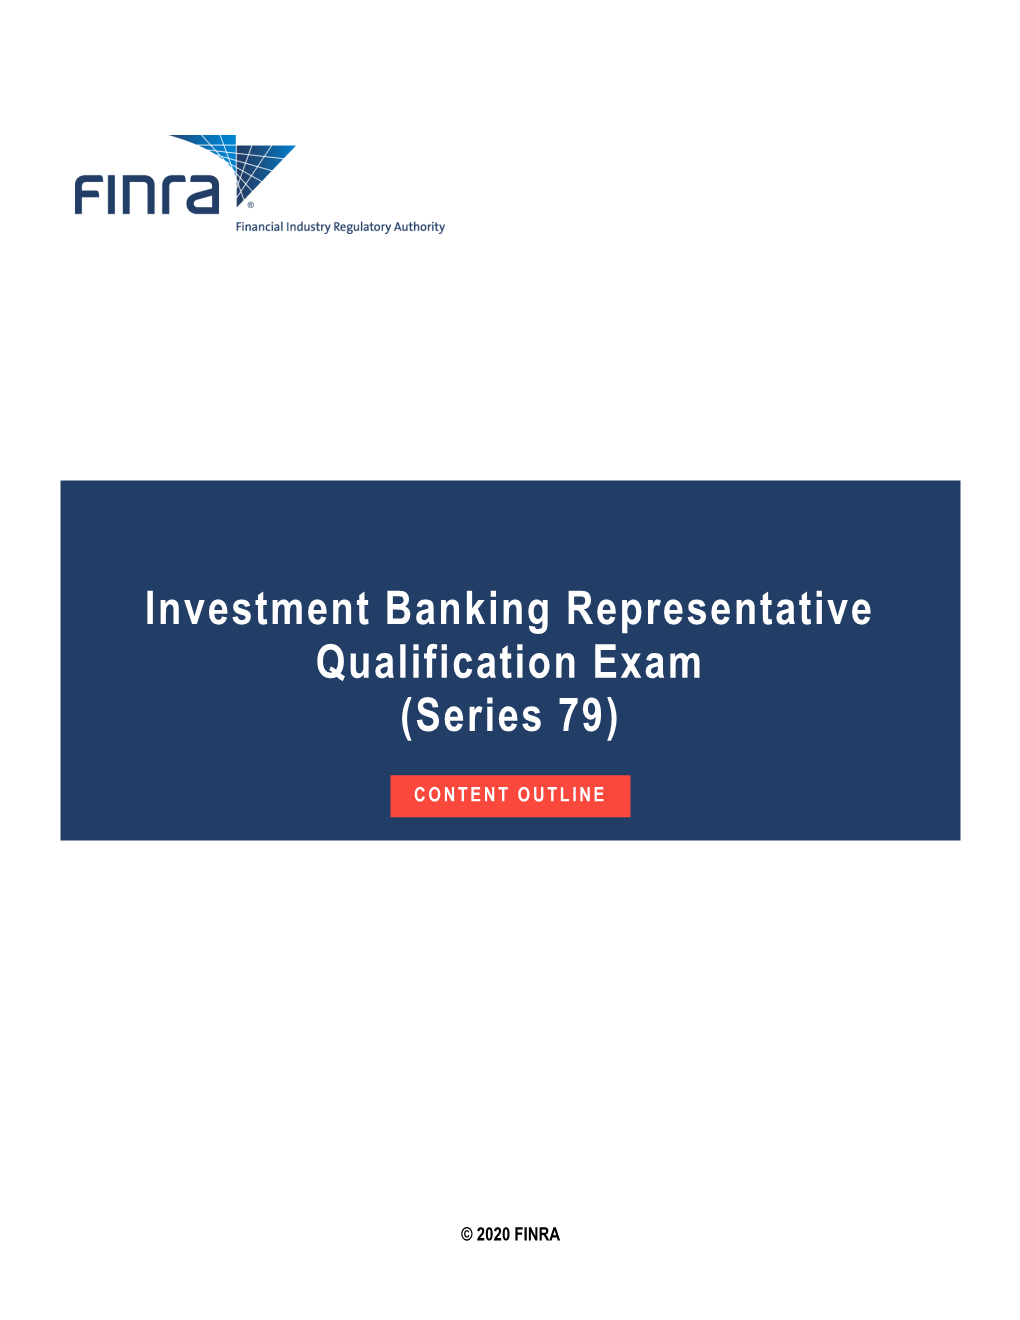 Investment Banking Representative Qualification Exam (Series